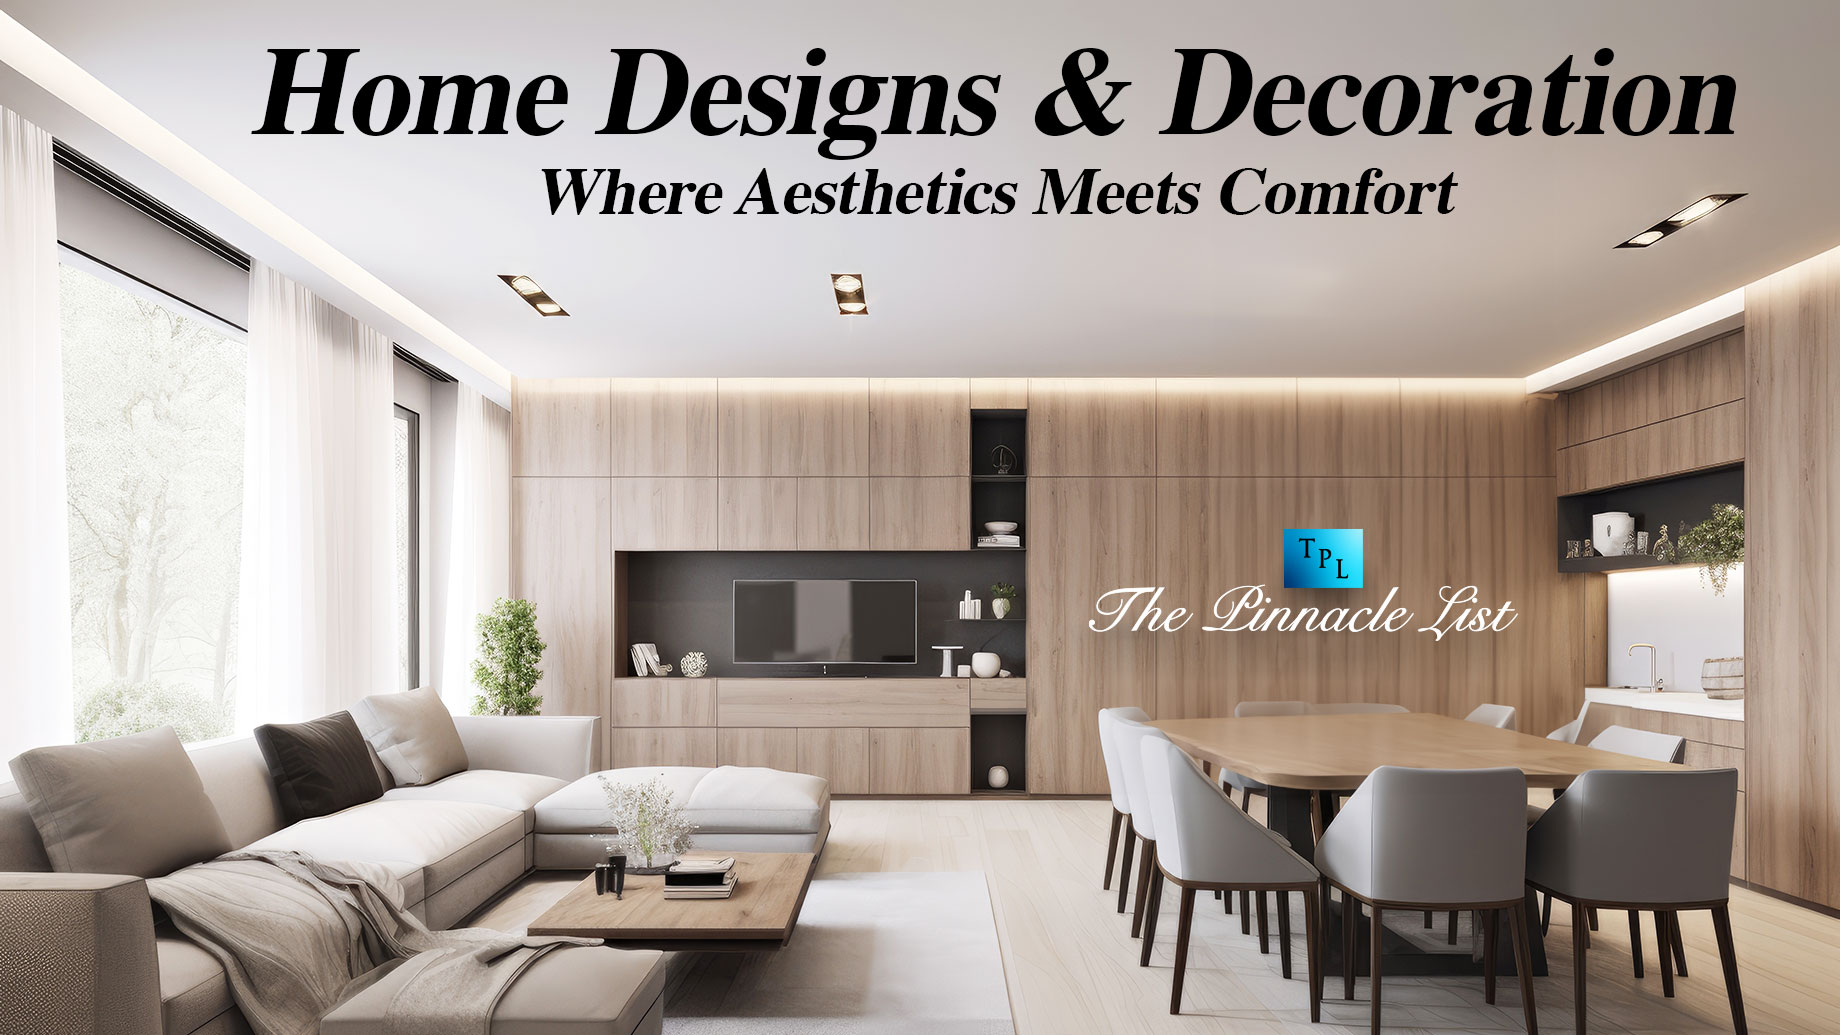 Home Designs & Decoration: Where Aesthetics Meets Comfort